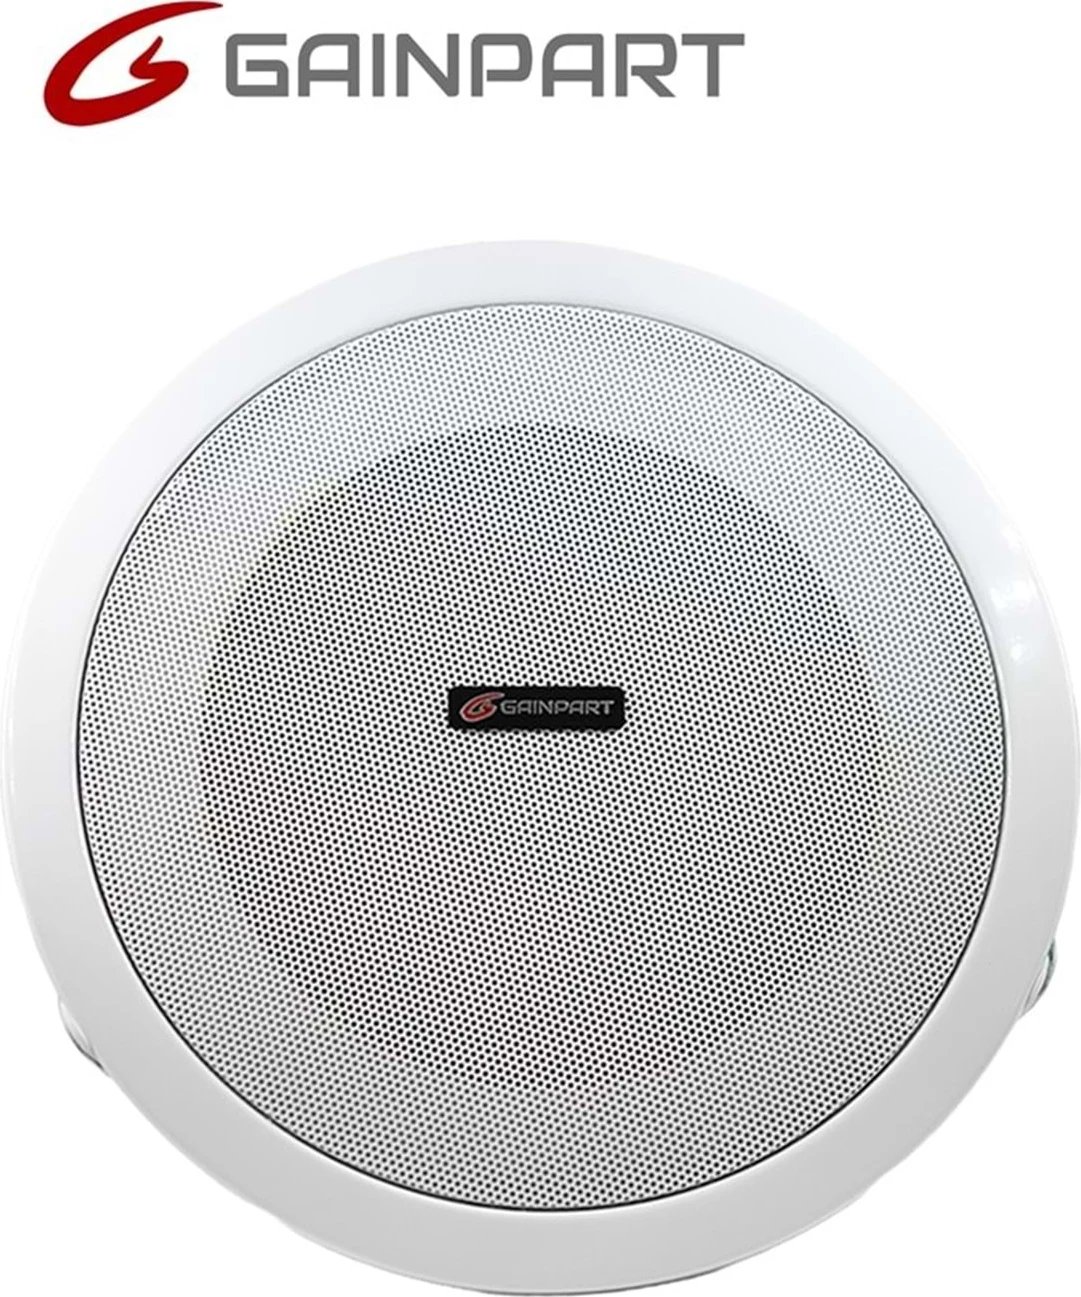  GNP-265C20W Ceiling Speakers 10W 246x75mm